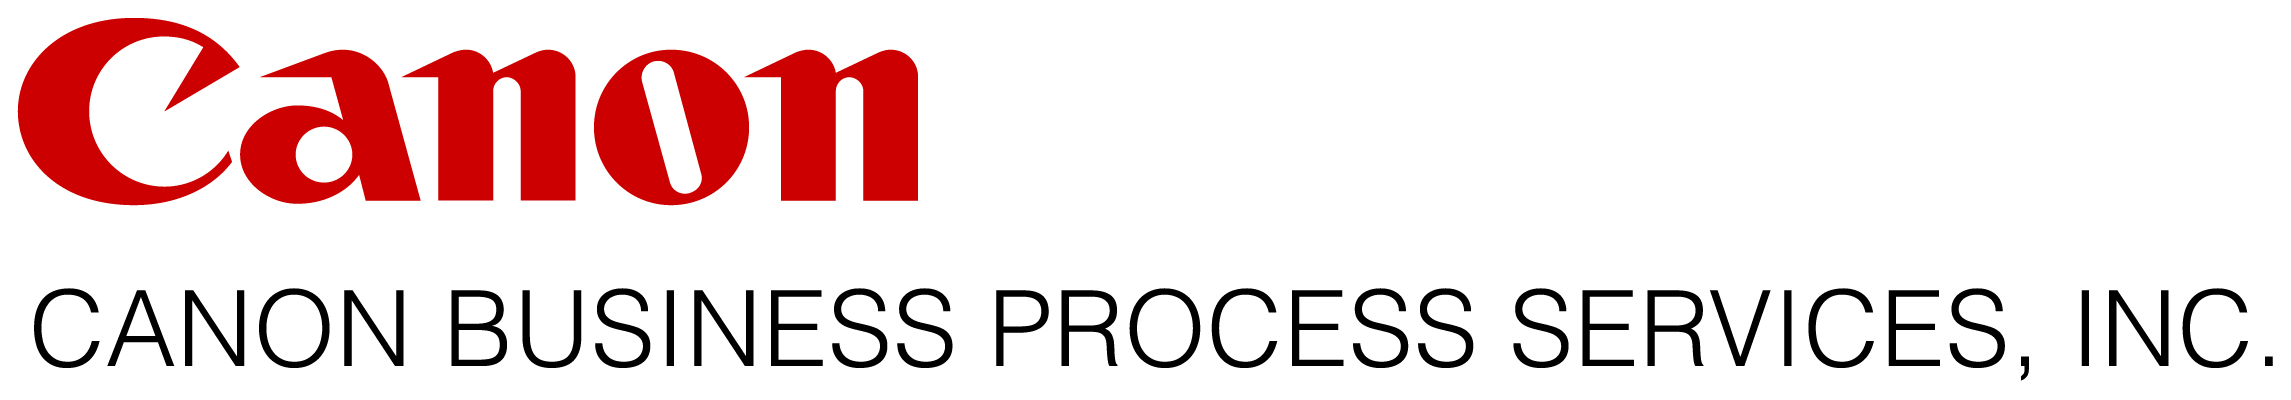 Canon Business Process Services Inc. logo